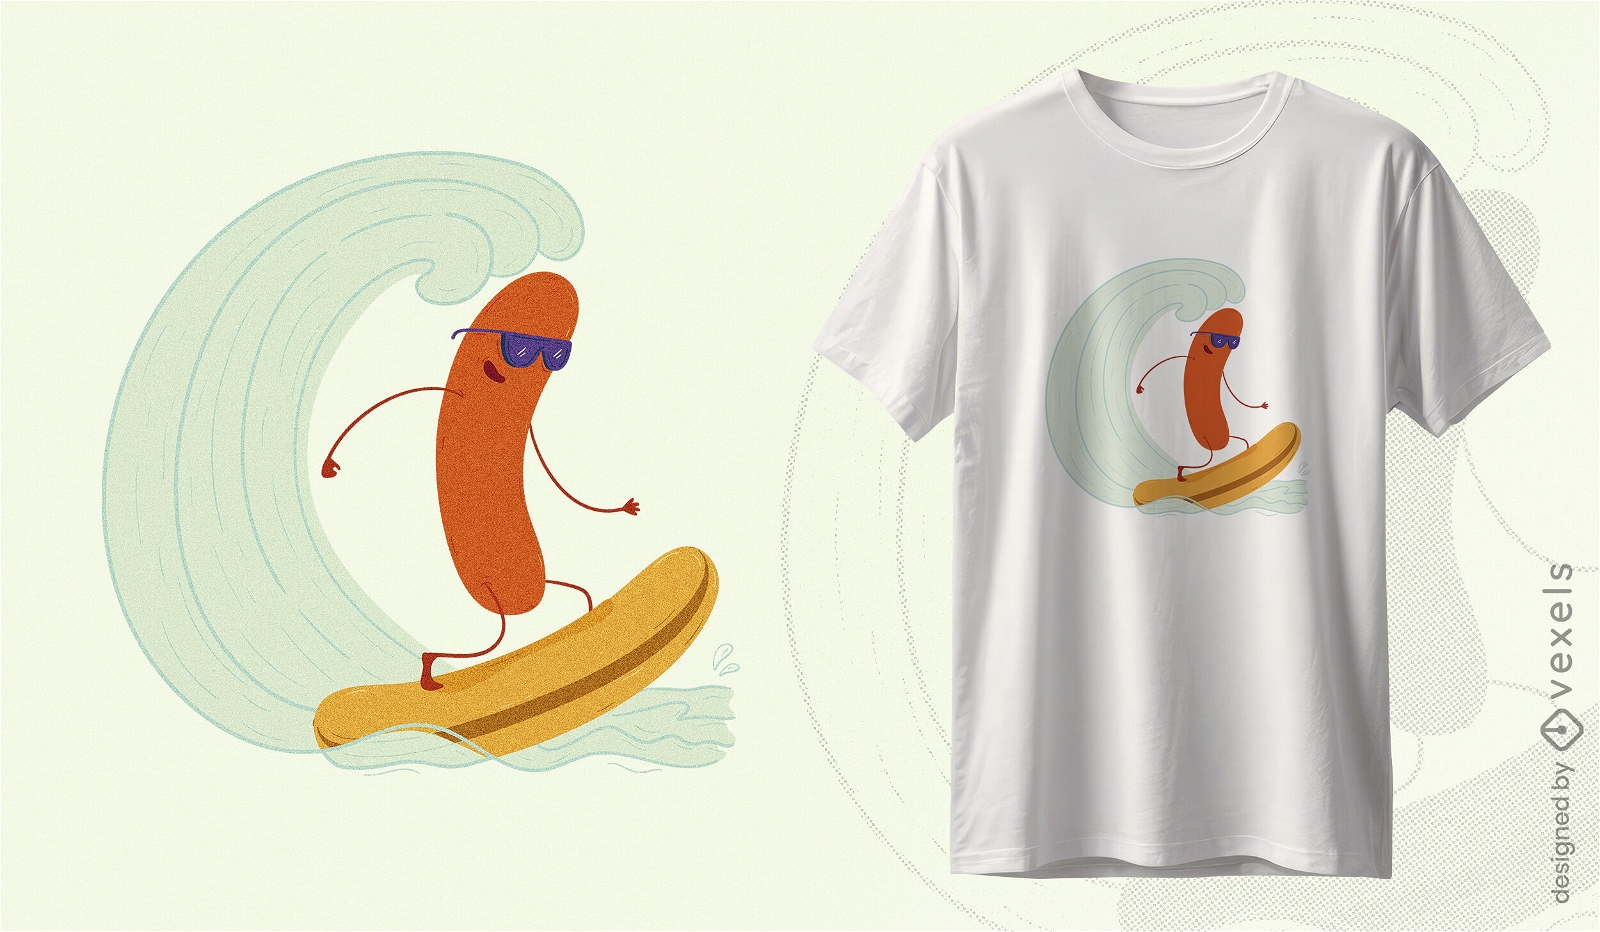 Dise?o de camiseta de surf de hotdog aventurero.